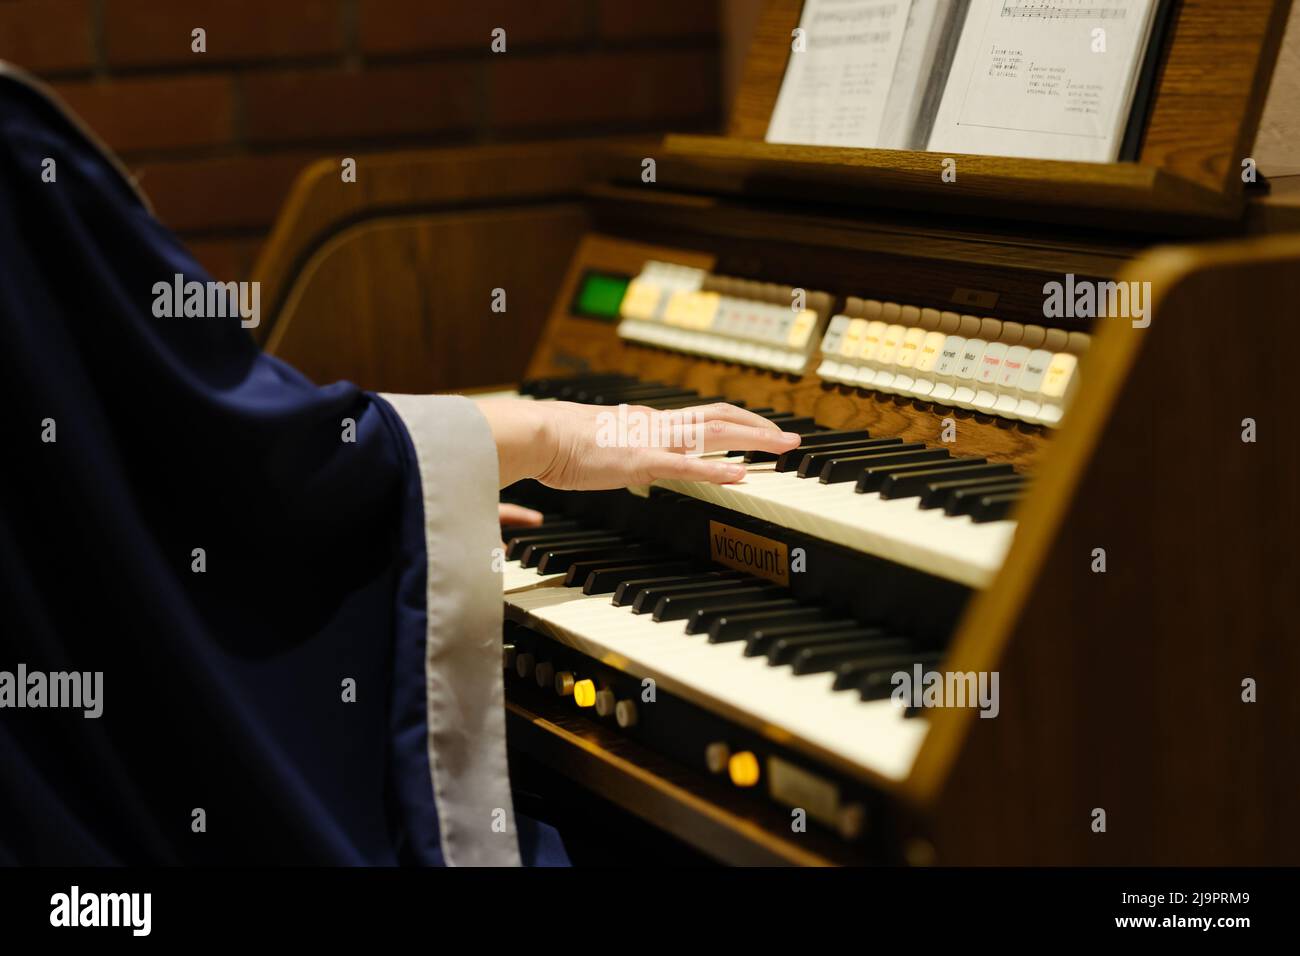 Electronic organ player Stock Photo